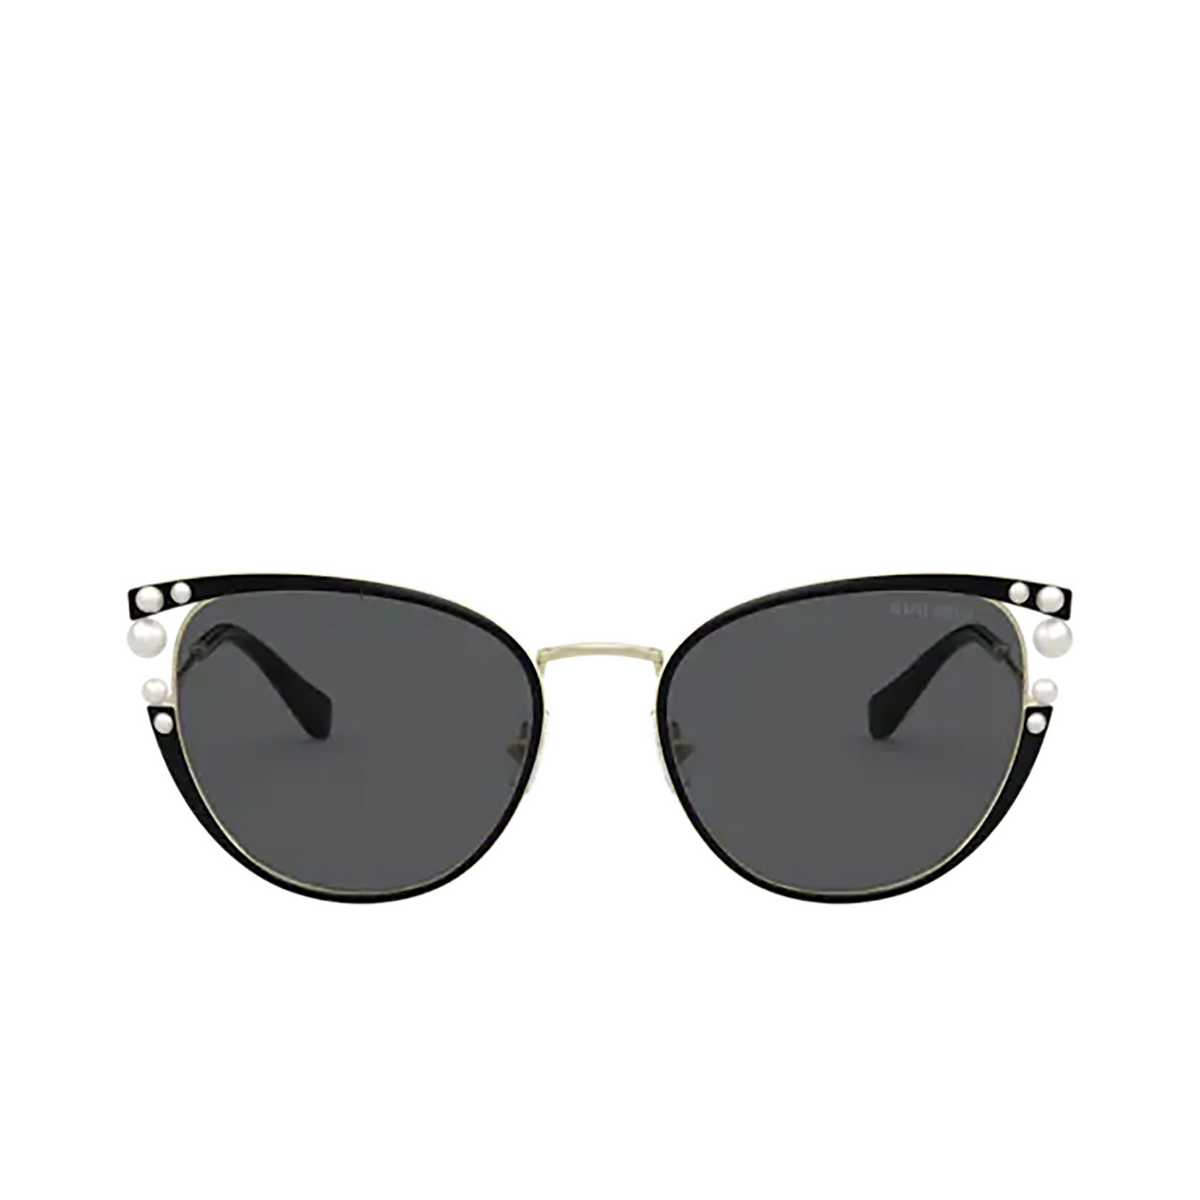 Miu Miu® Cat-eye Sunglasses: Core Collection MU 62VS color Black AAV5S0 - front view.